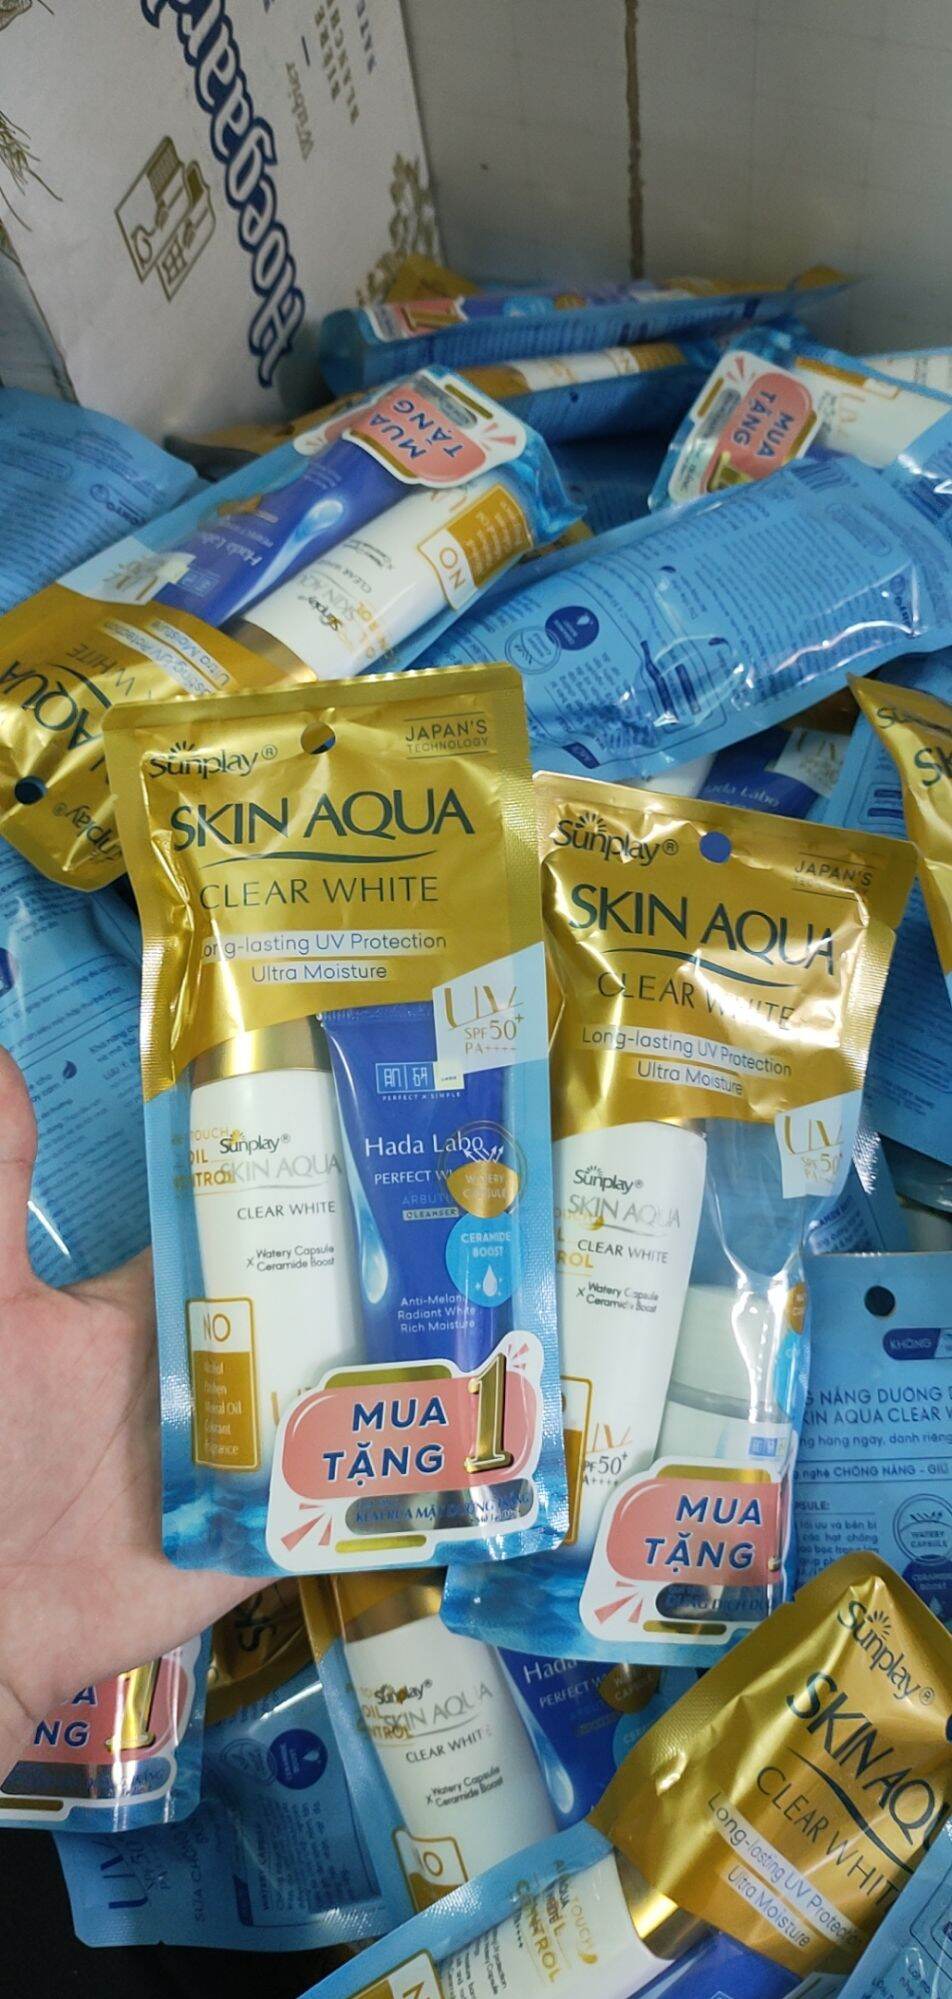 [HCM]Chống nắng Sunplay Skin Aqua Clear White 25g cao cấp